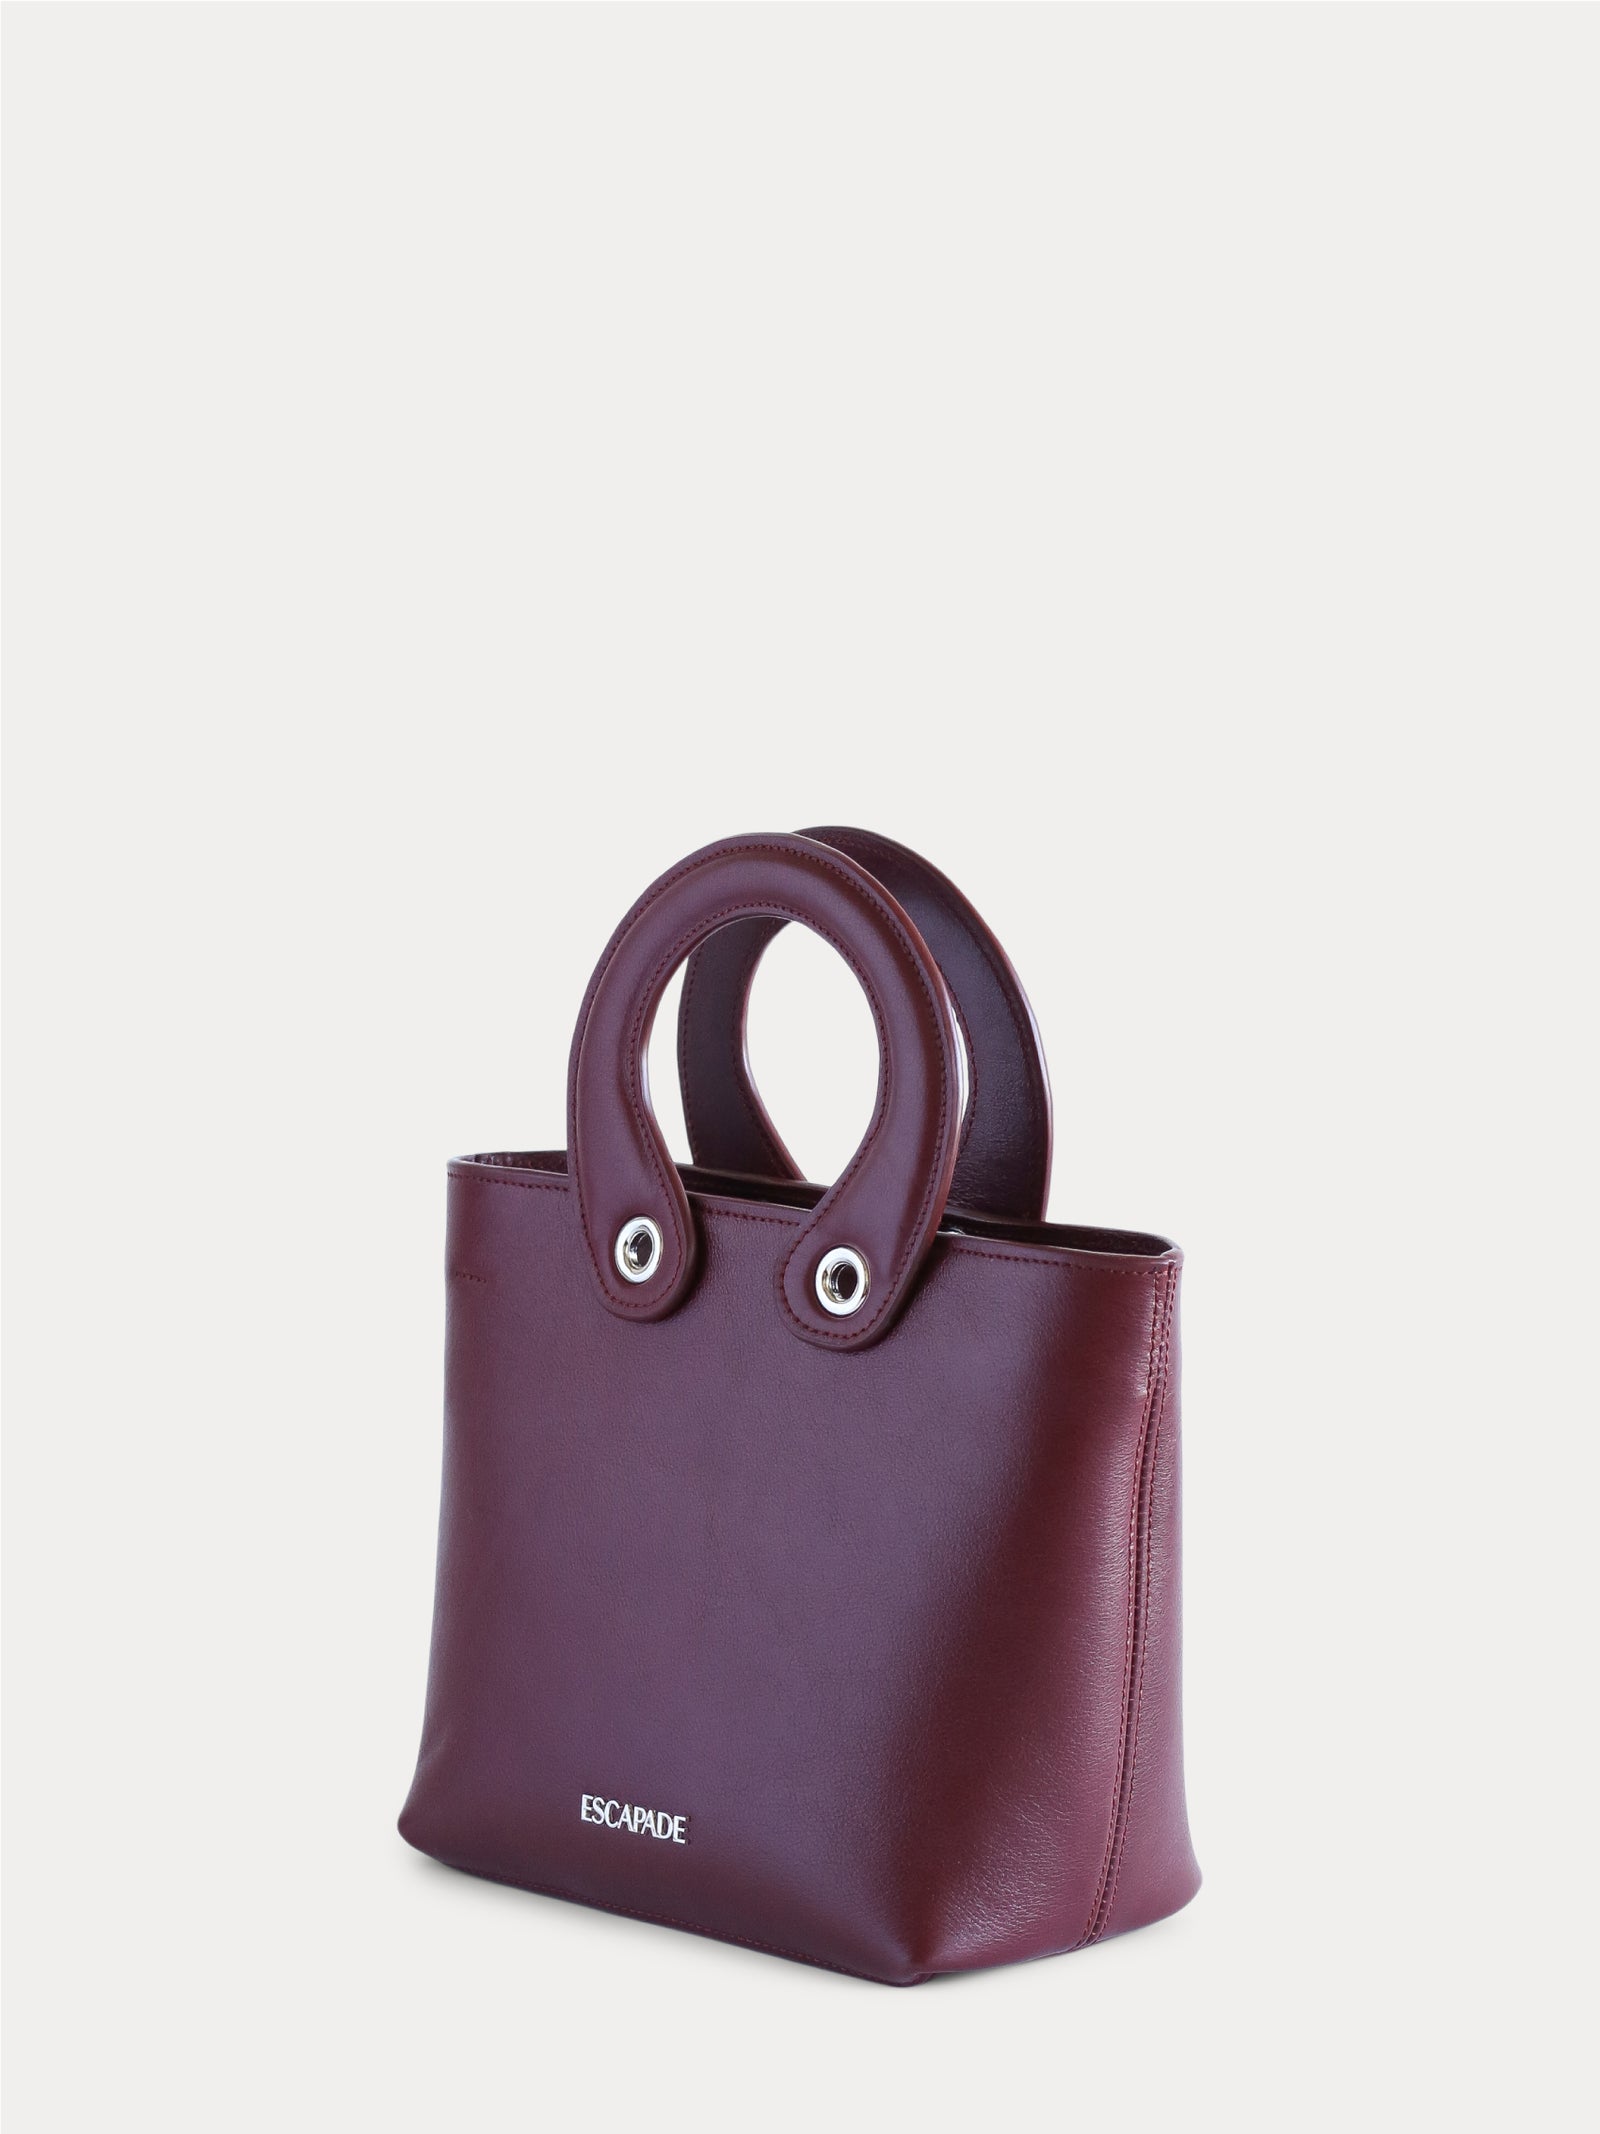 handmade burgundy leather bag for woman